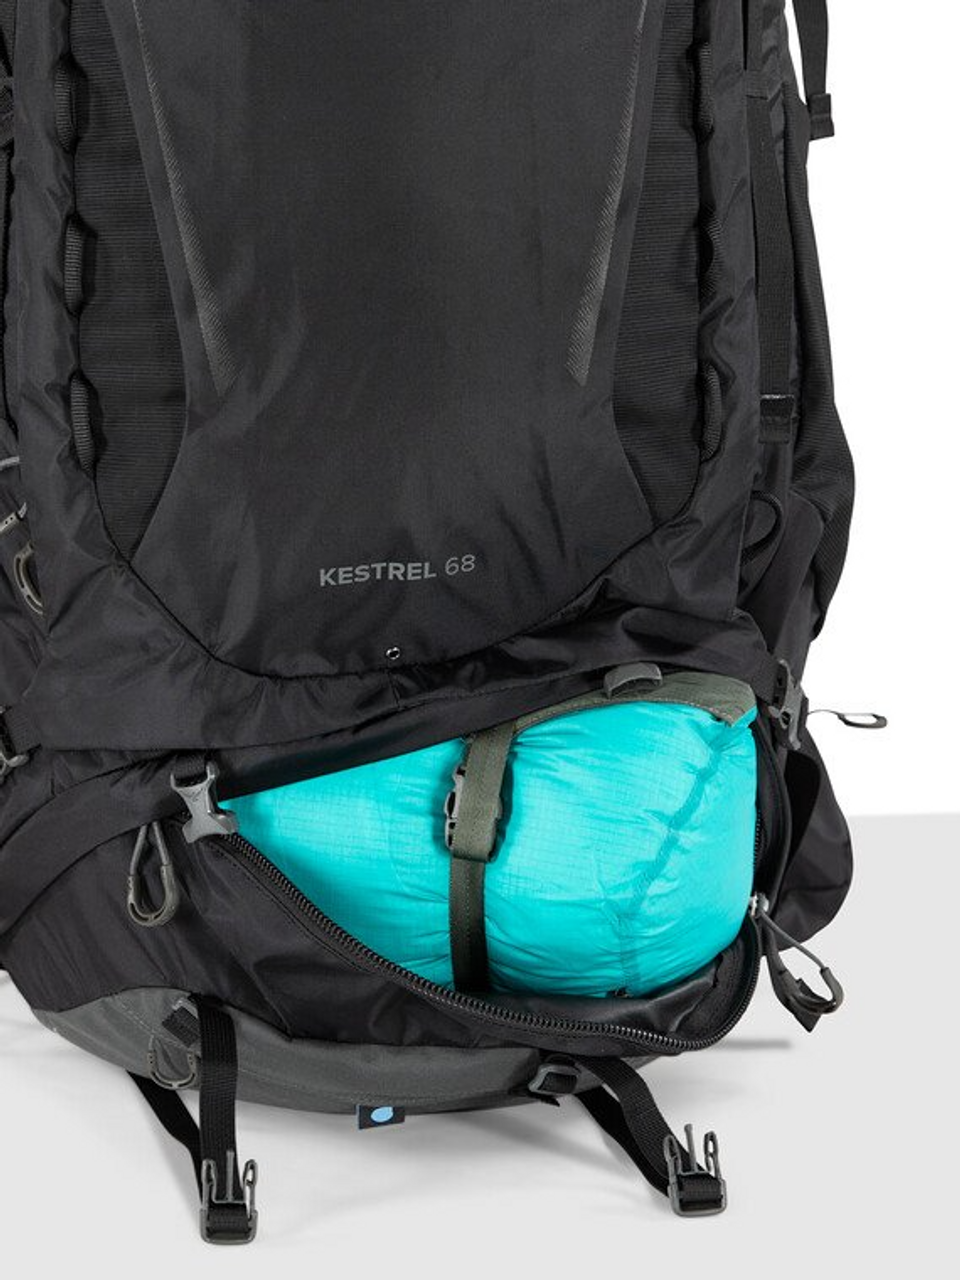 Kestrel 68 - Rugged Men's All-Weather Backpacking Pack